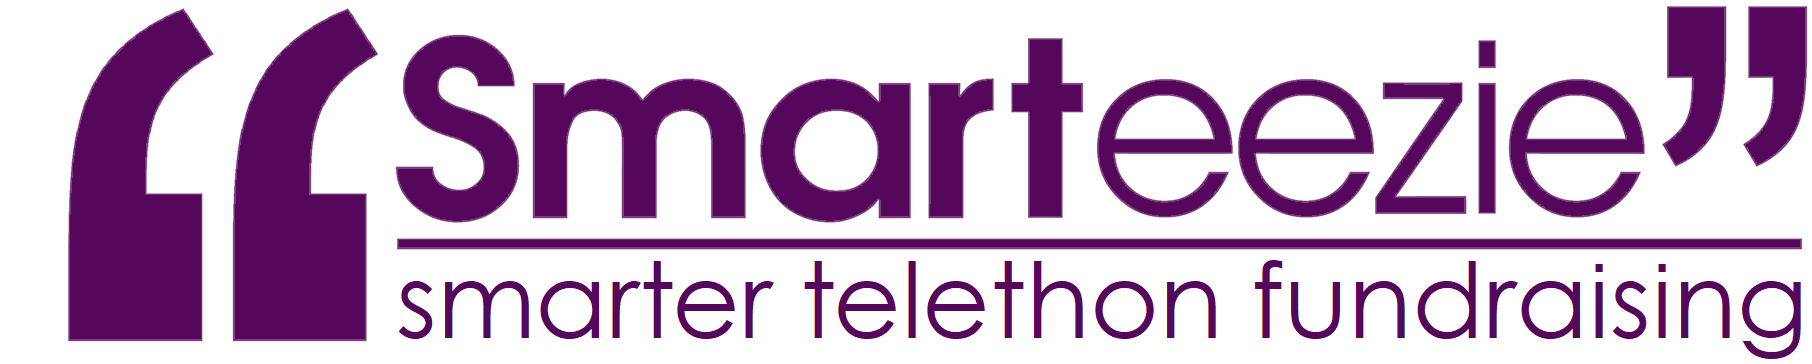 Smarteezie logo: smarter telethon fundraising